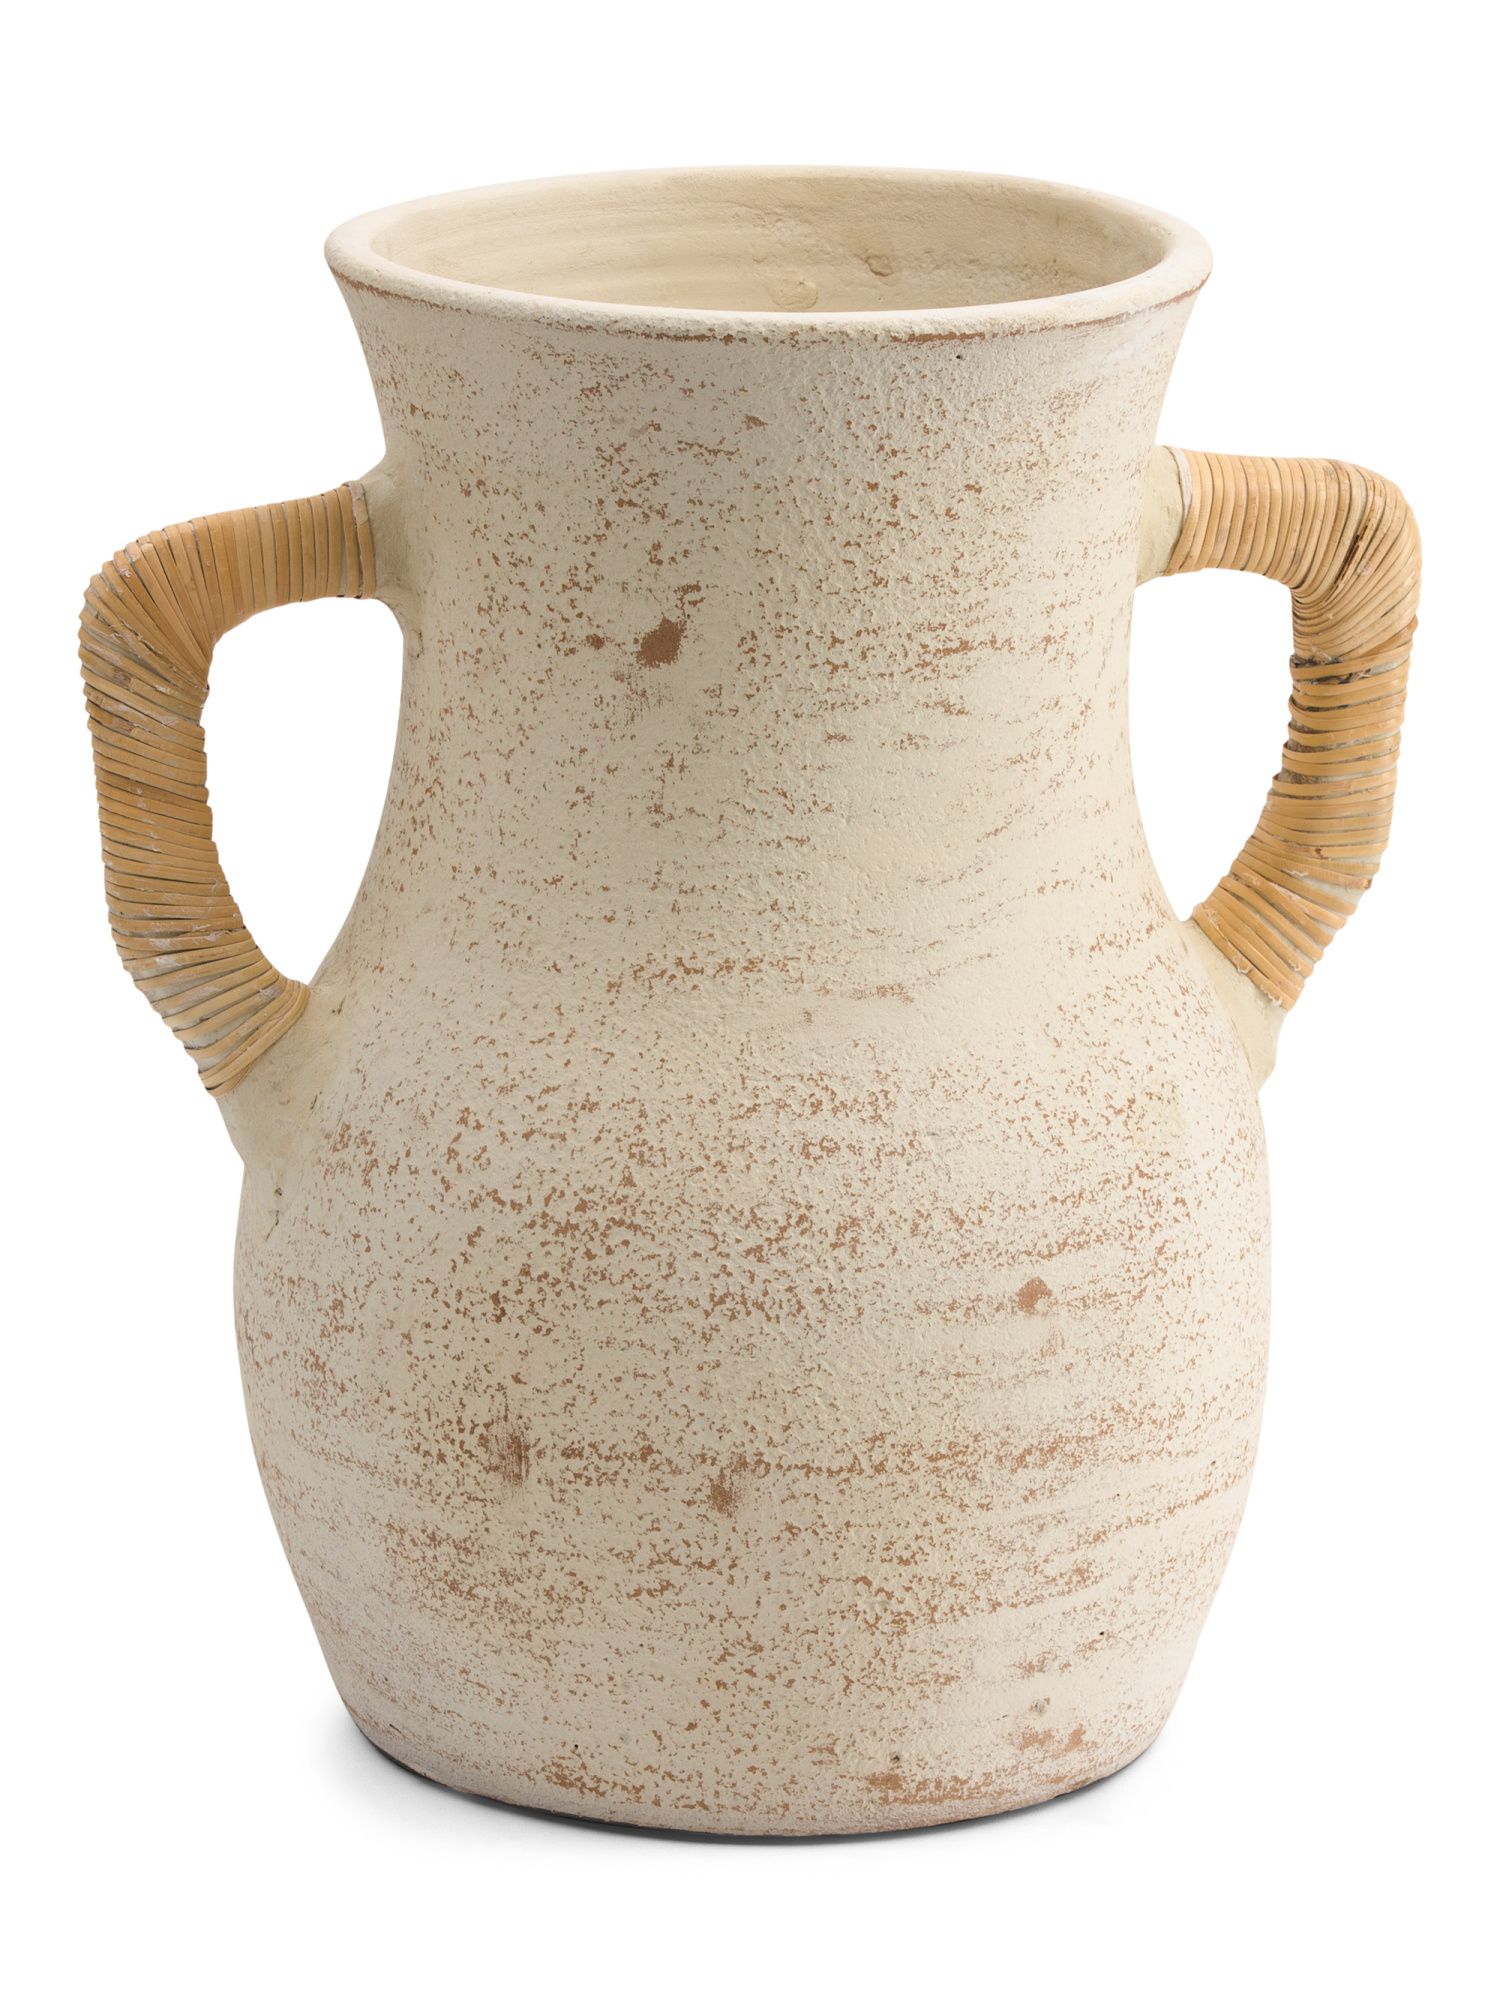 Terracotta Vase With Handles | TJ Maxx